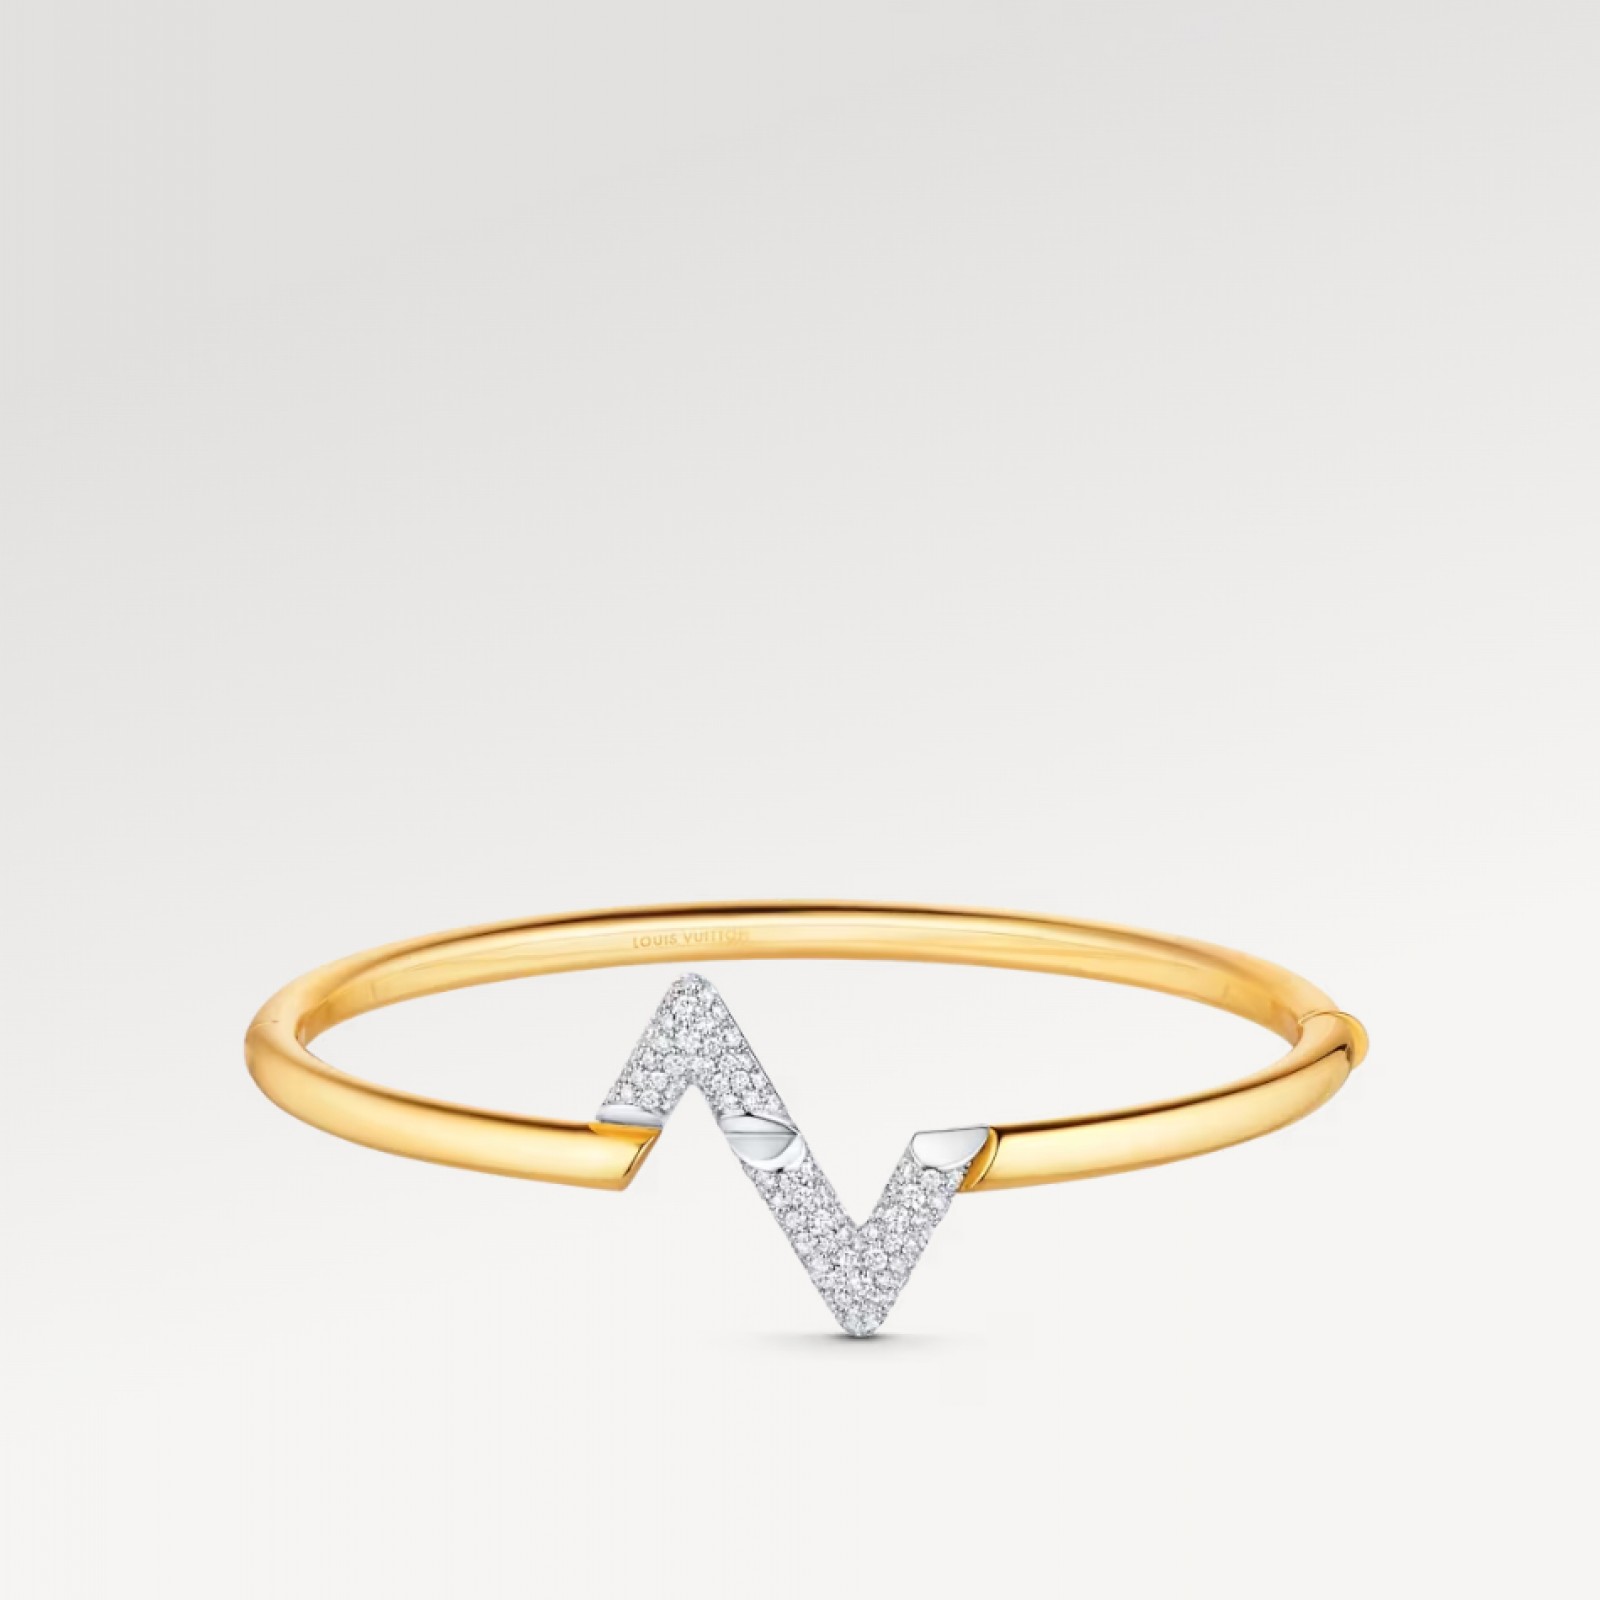 LV Volt Upside Down Bracelet, Yellow Gold, White Gold And Diamonds